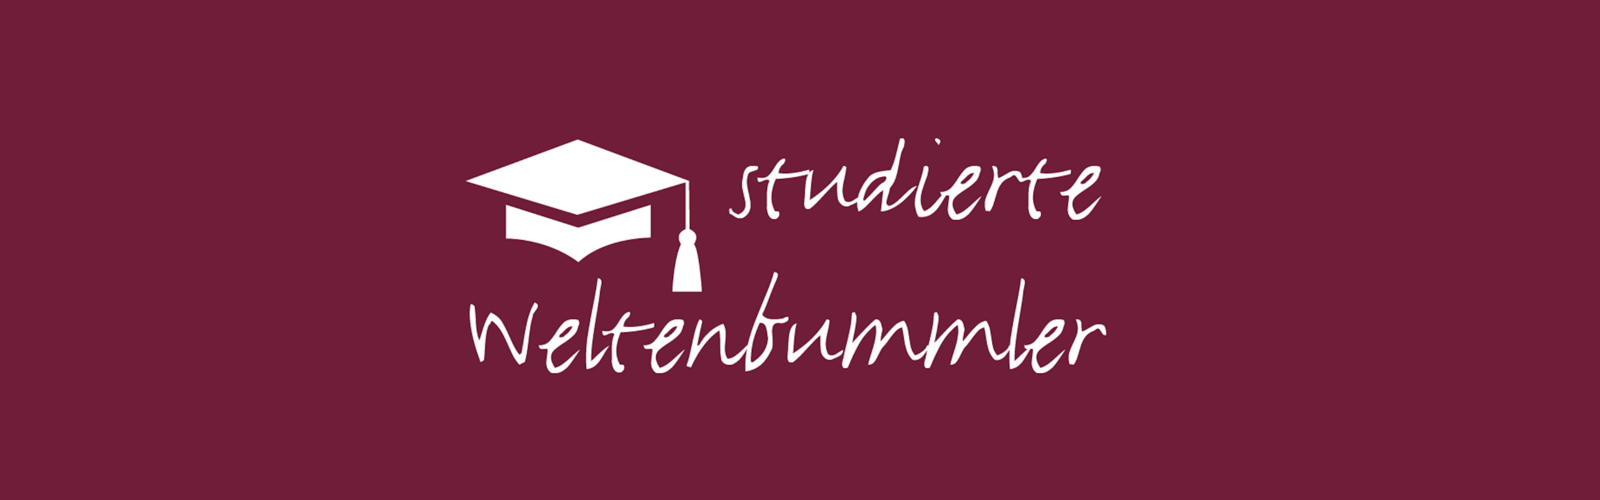 Logo Studierte Weltenbummler der HWR Berlin,
        
    

        
            Foto: Studierte Weltenbummler